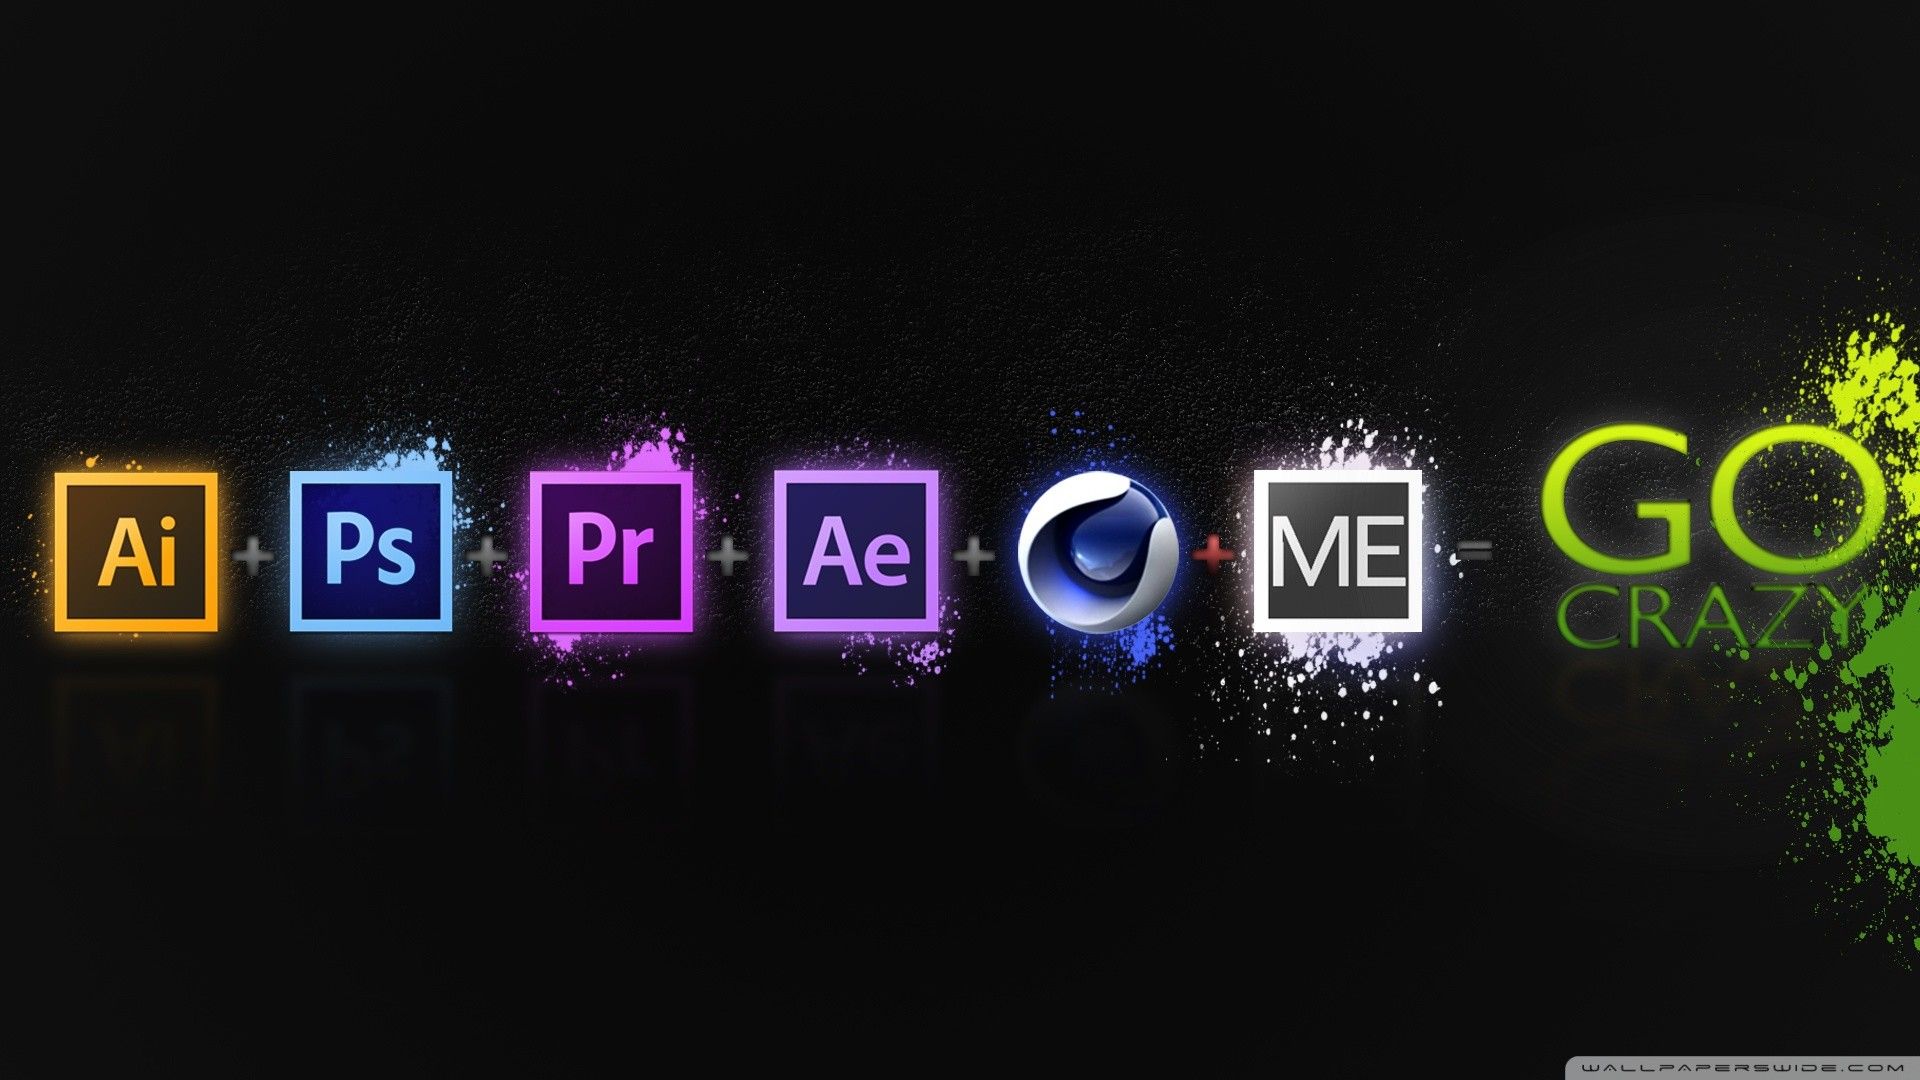 adobe premiere pro logo transparent background